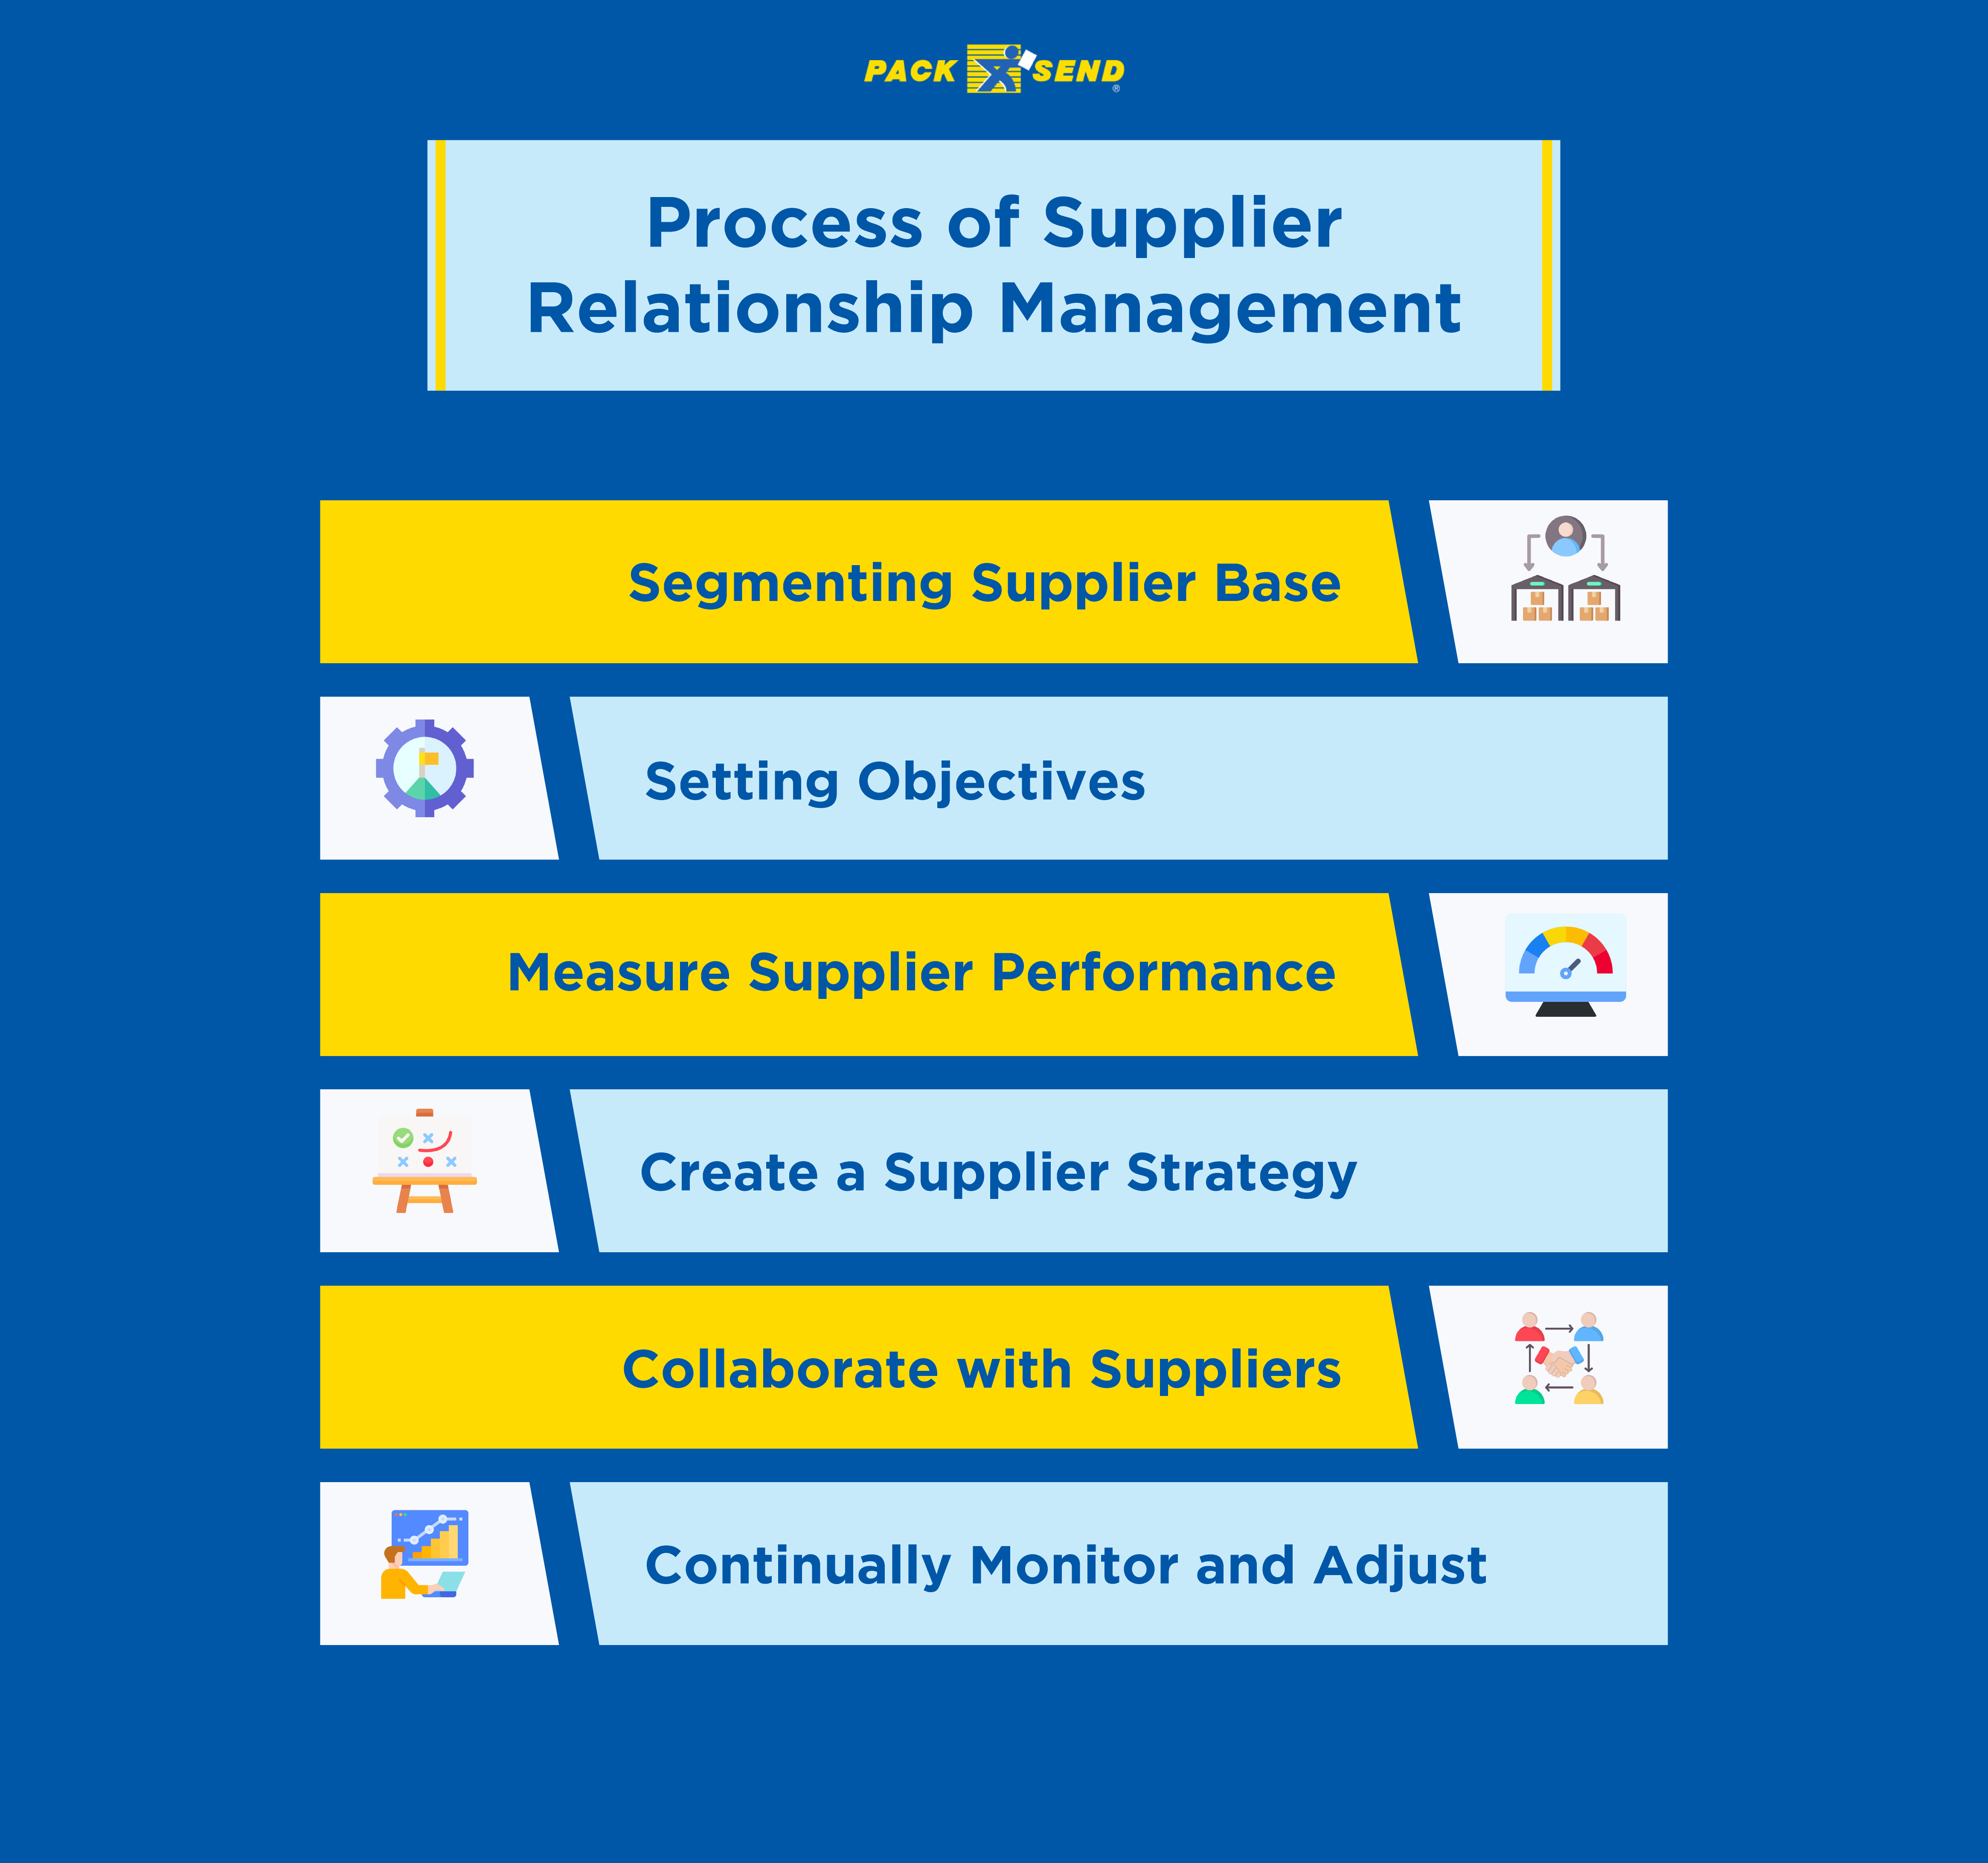 Process of Supplier Relationship Management